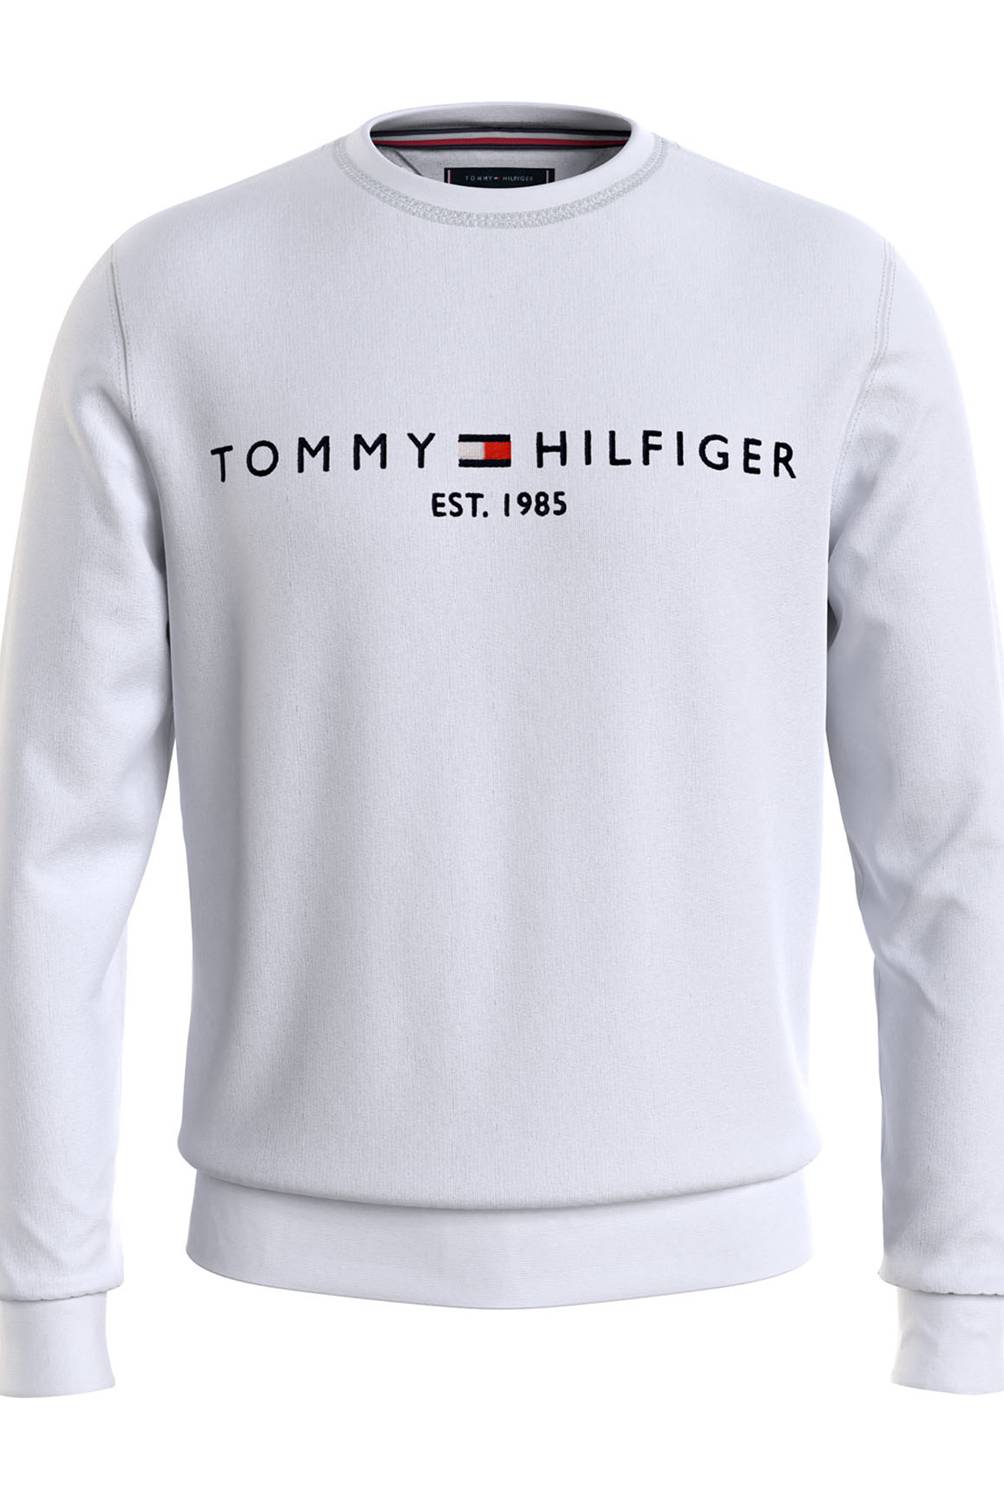 TOMMY HILFIGER - Polerón Hombre